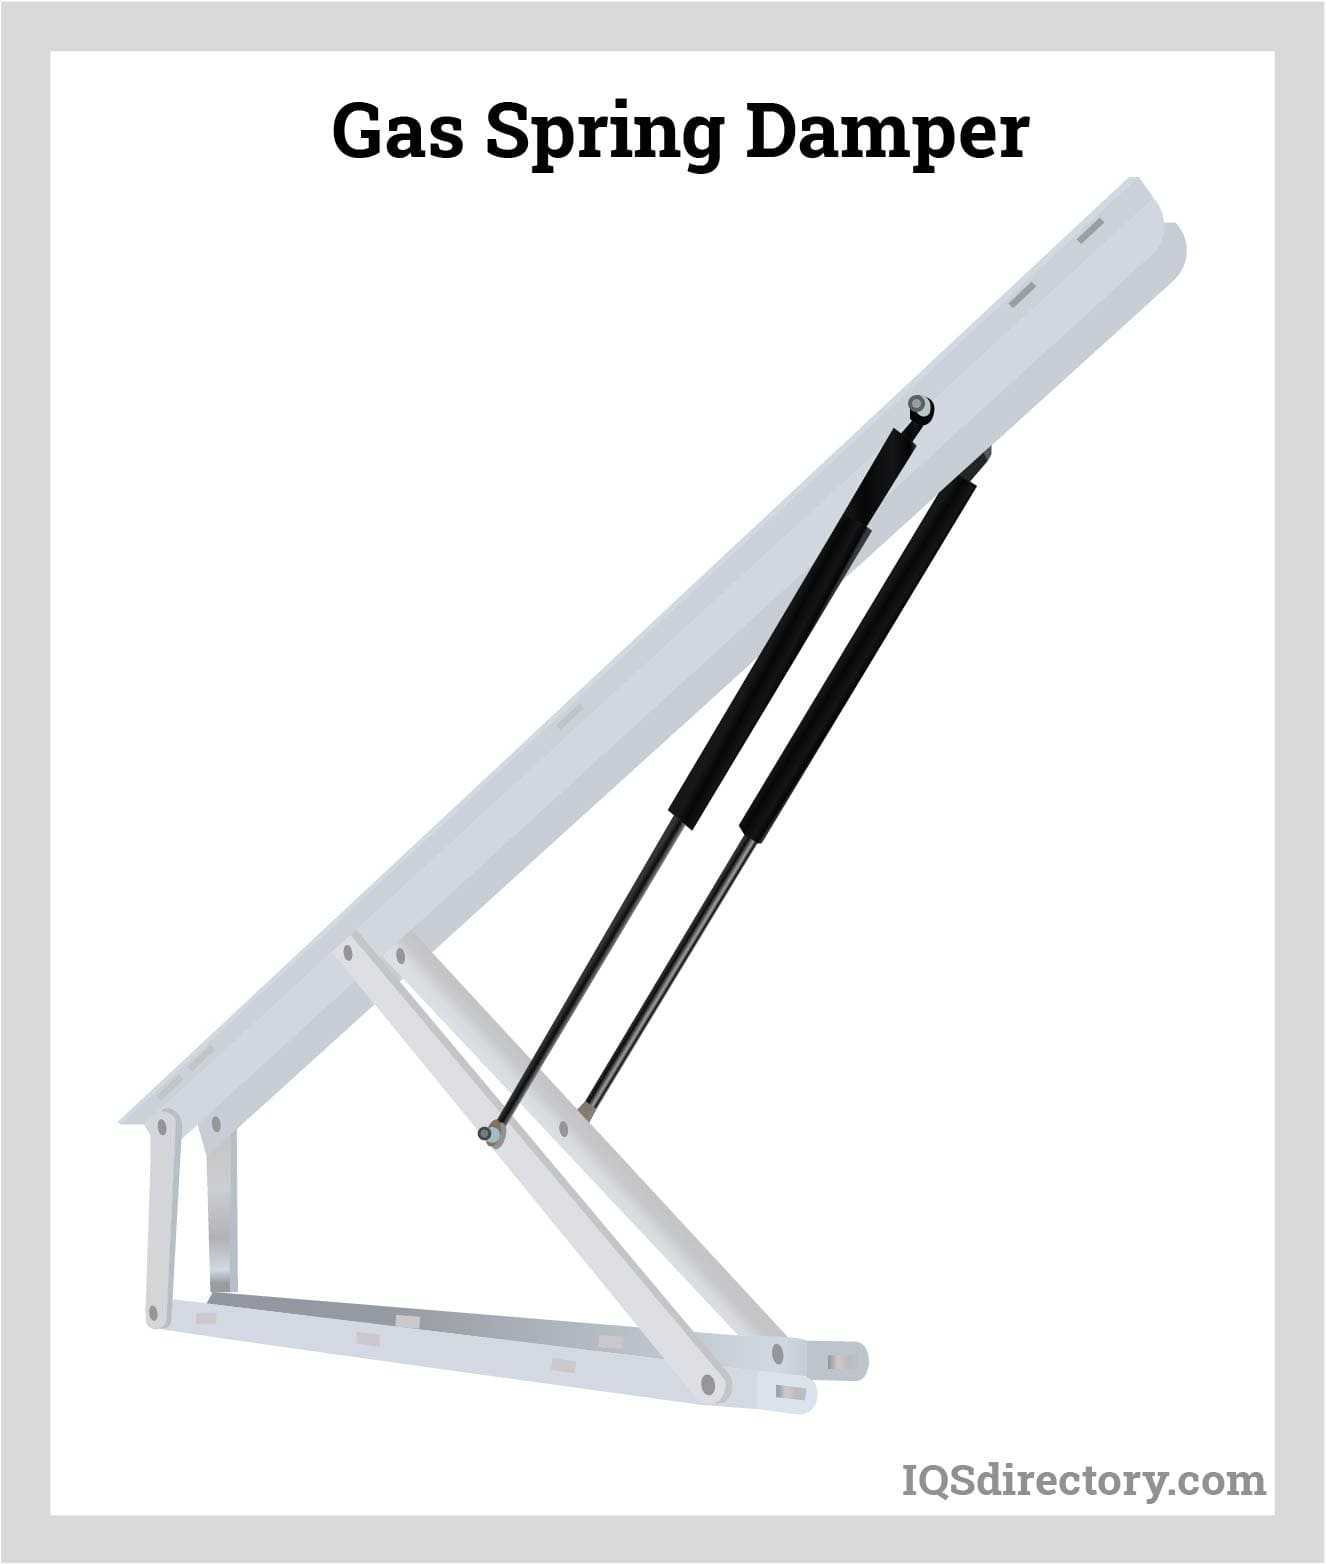 Gas Spring Damper